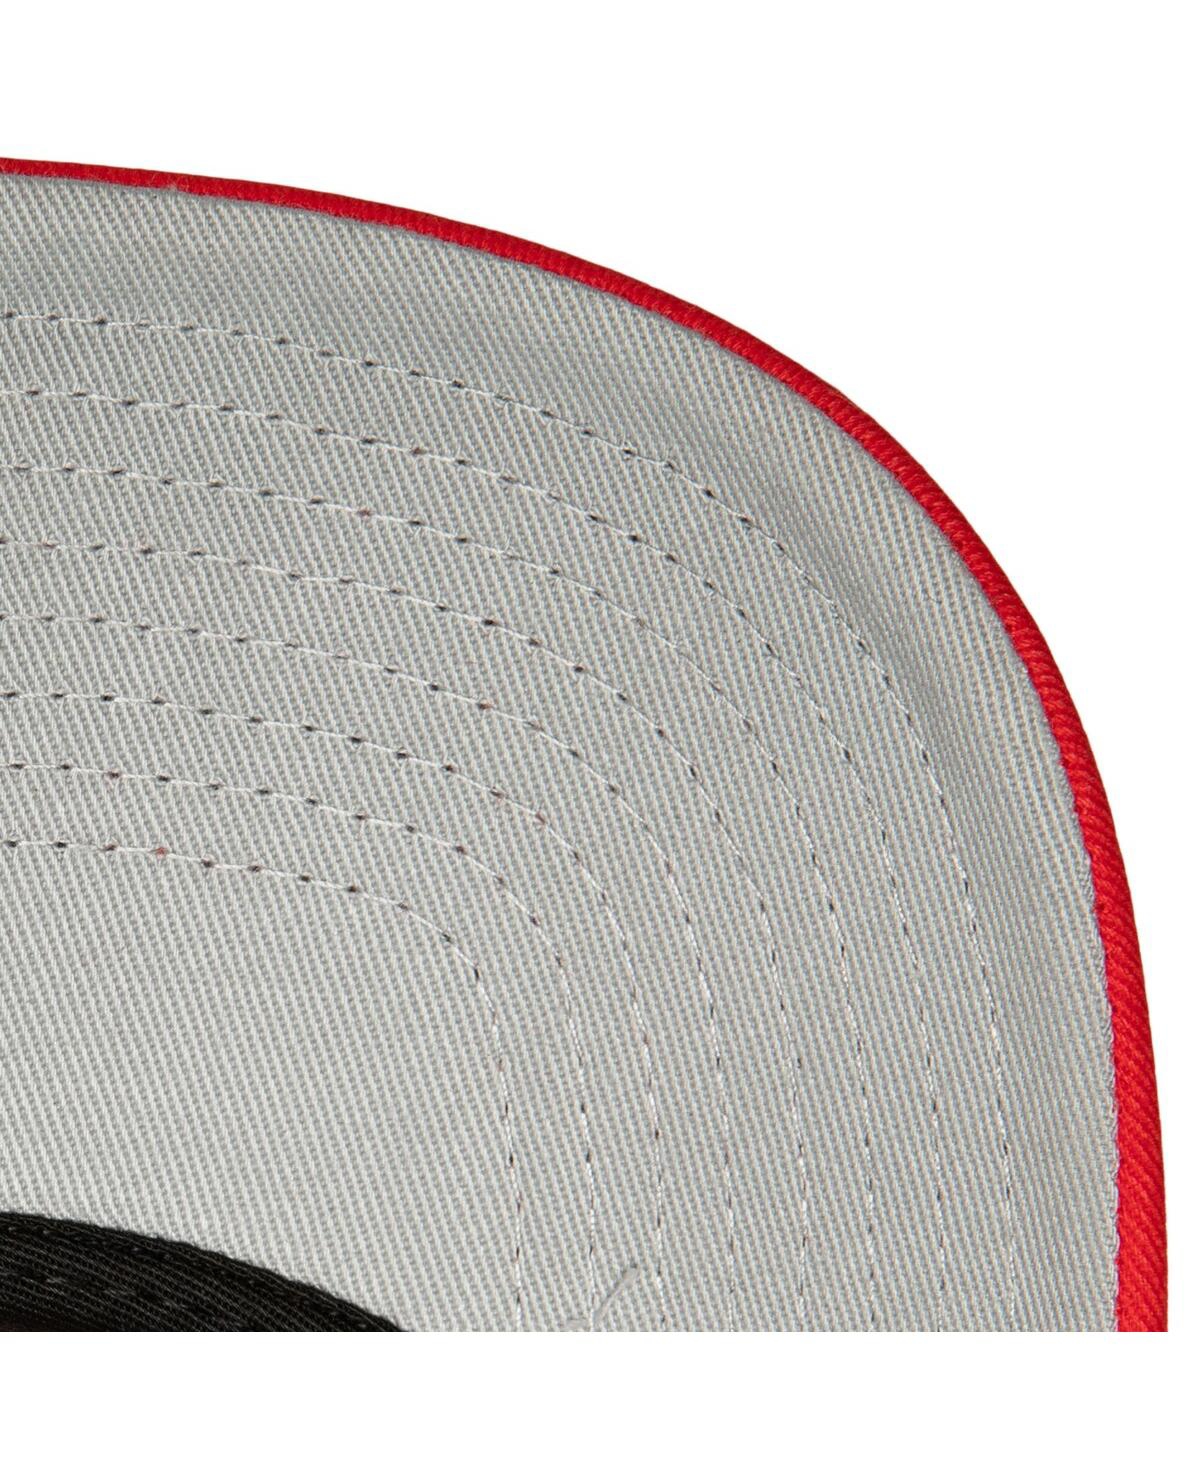 Shop Mitchell & Ness Men's  Red Chicago White Sox Curveball Trucker Snapback Hat